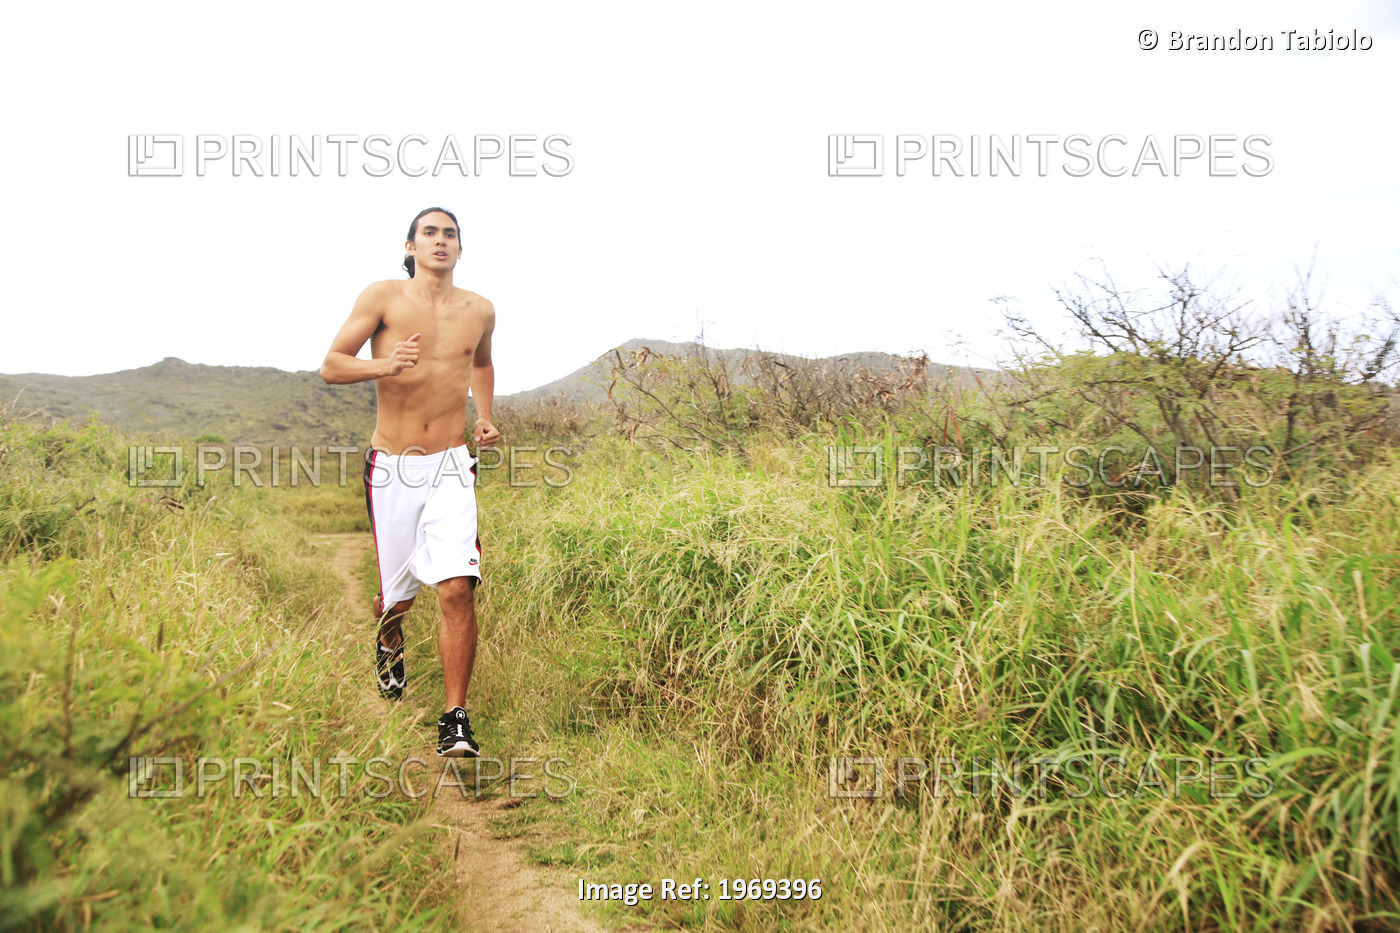 Hawaii, Oahu, Atheltic Male Jogging On An Outdoor Field Walkway Path